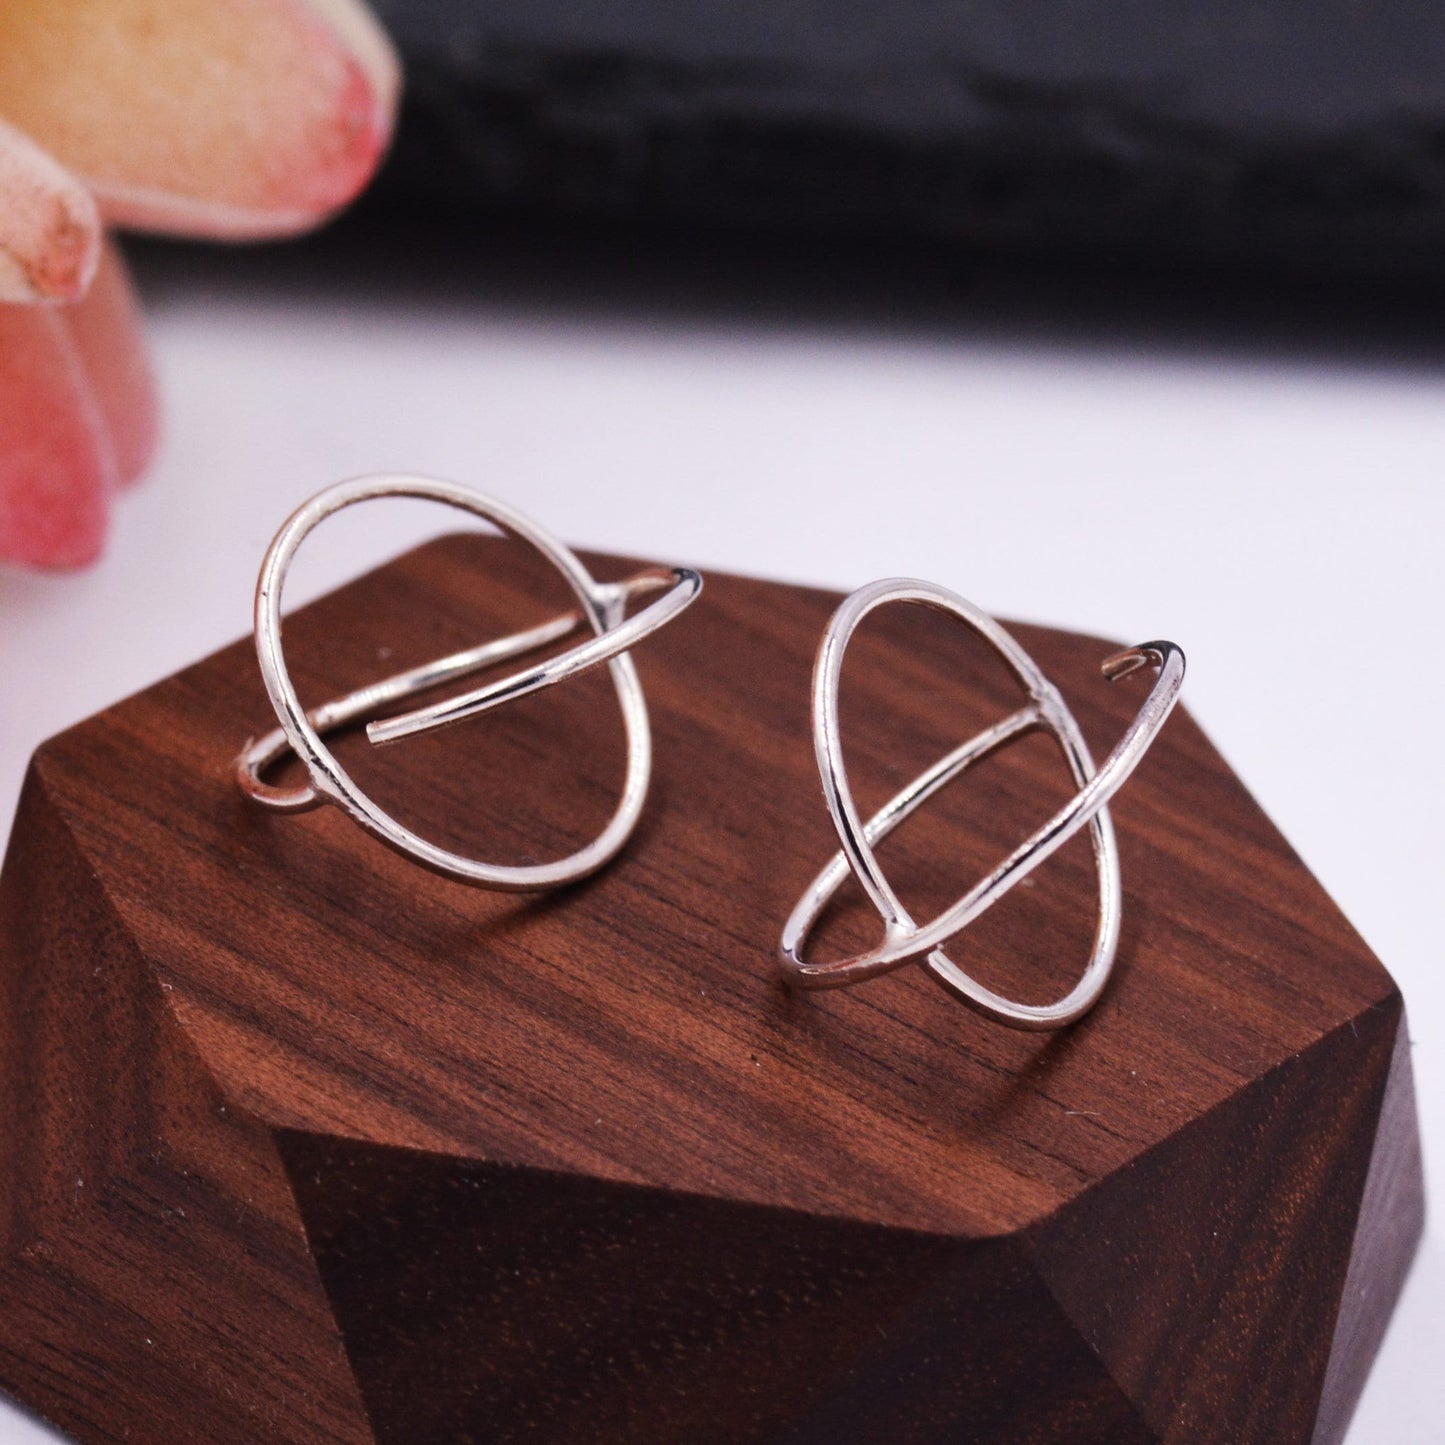 Circle Halo Stud Earrings in Sterling Silver, Geometric Threader Pull Through Earrings,